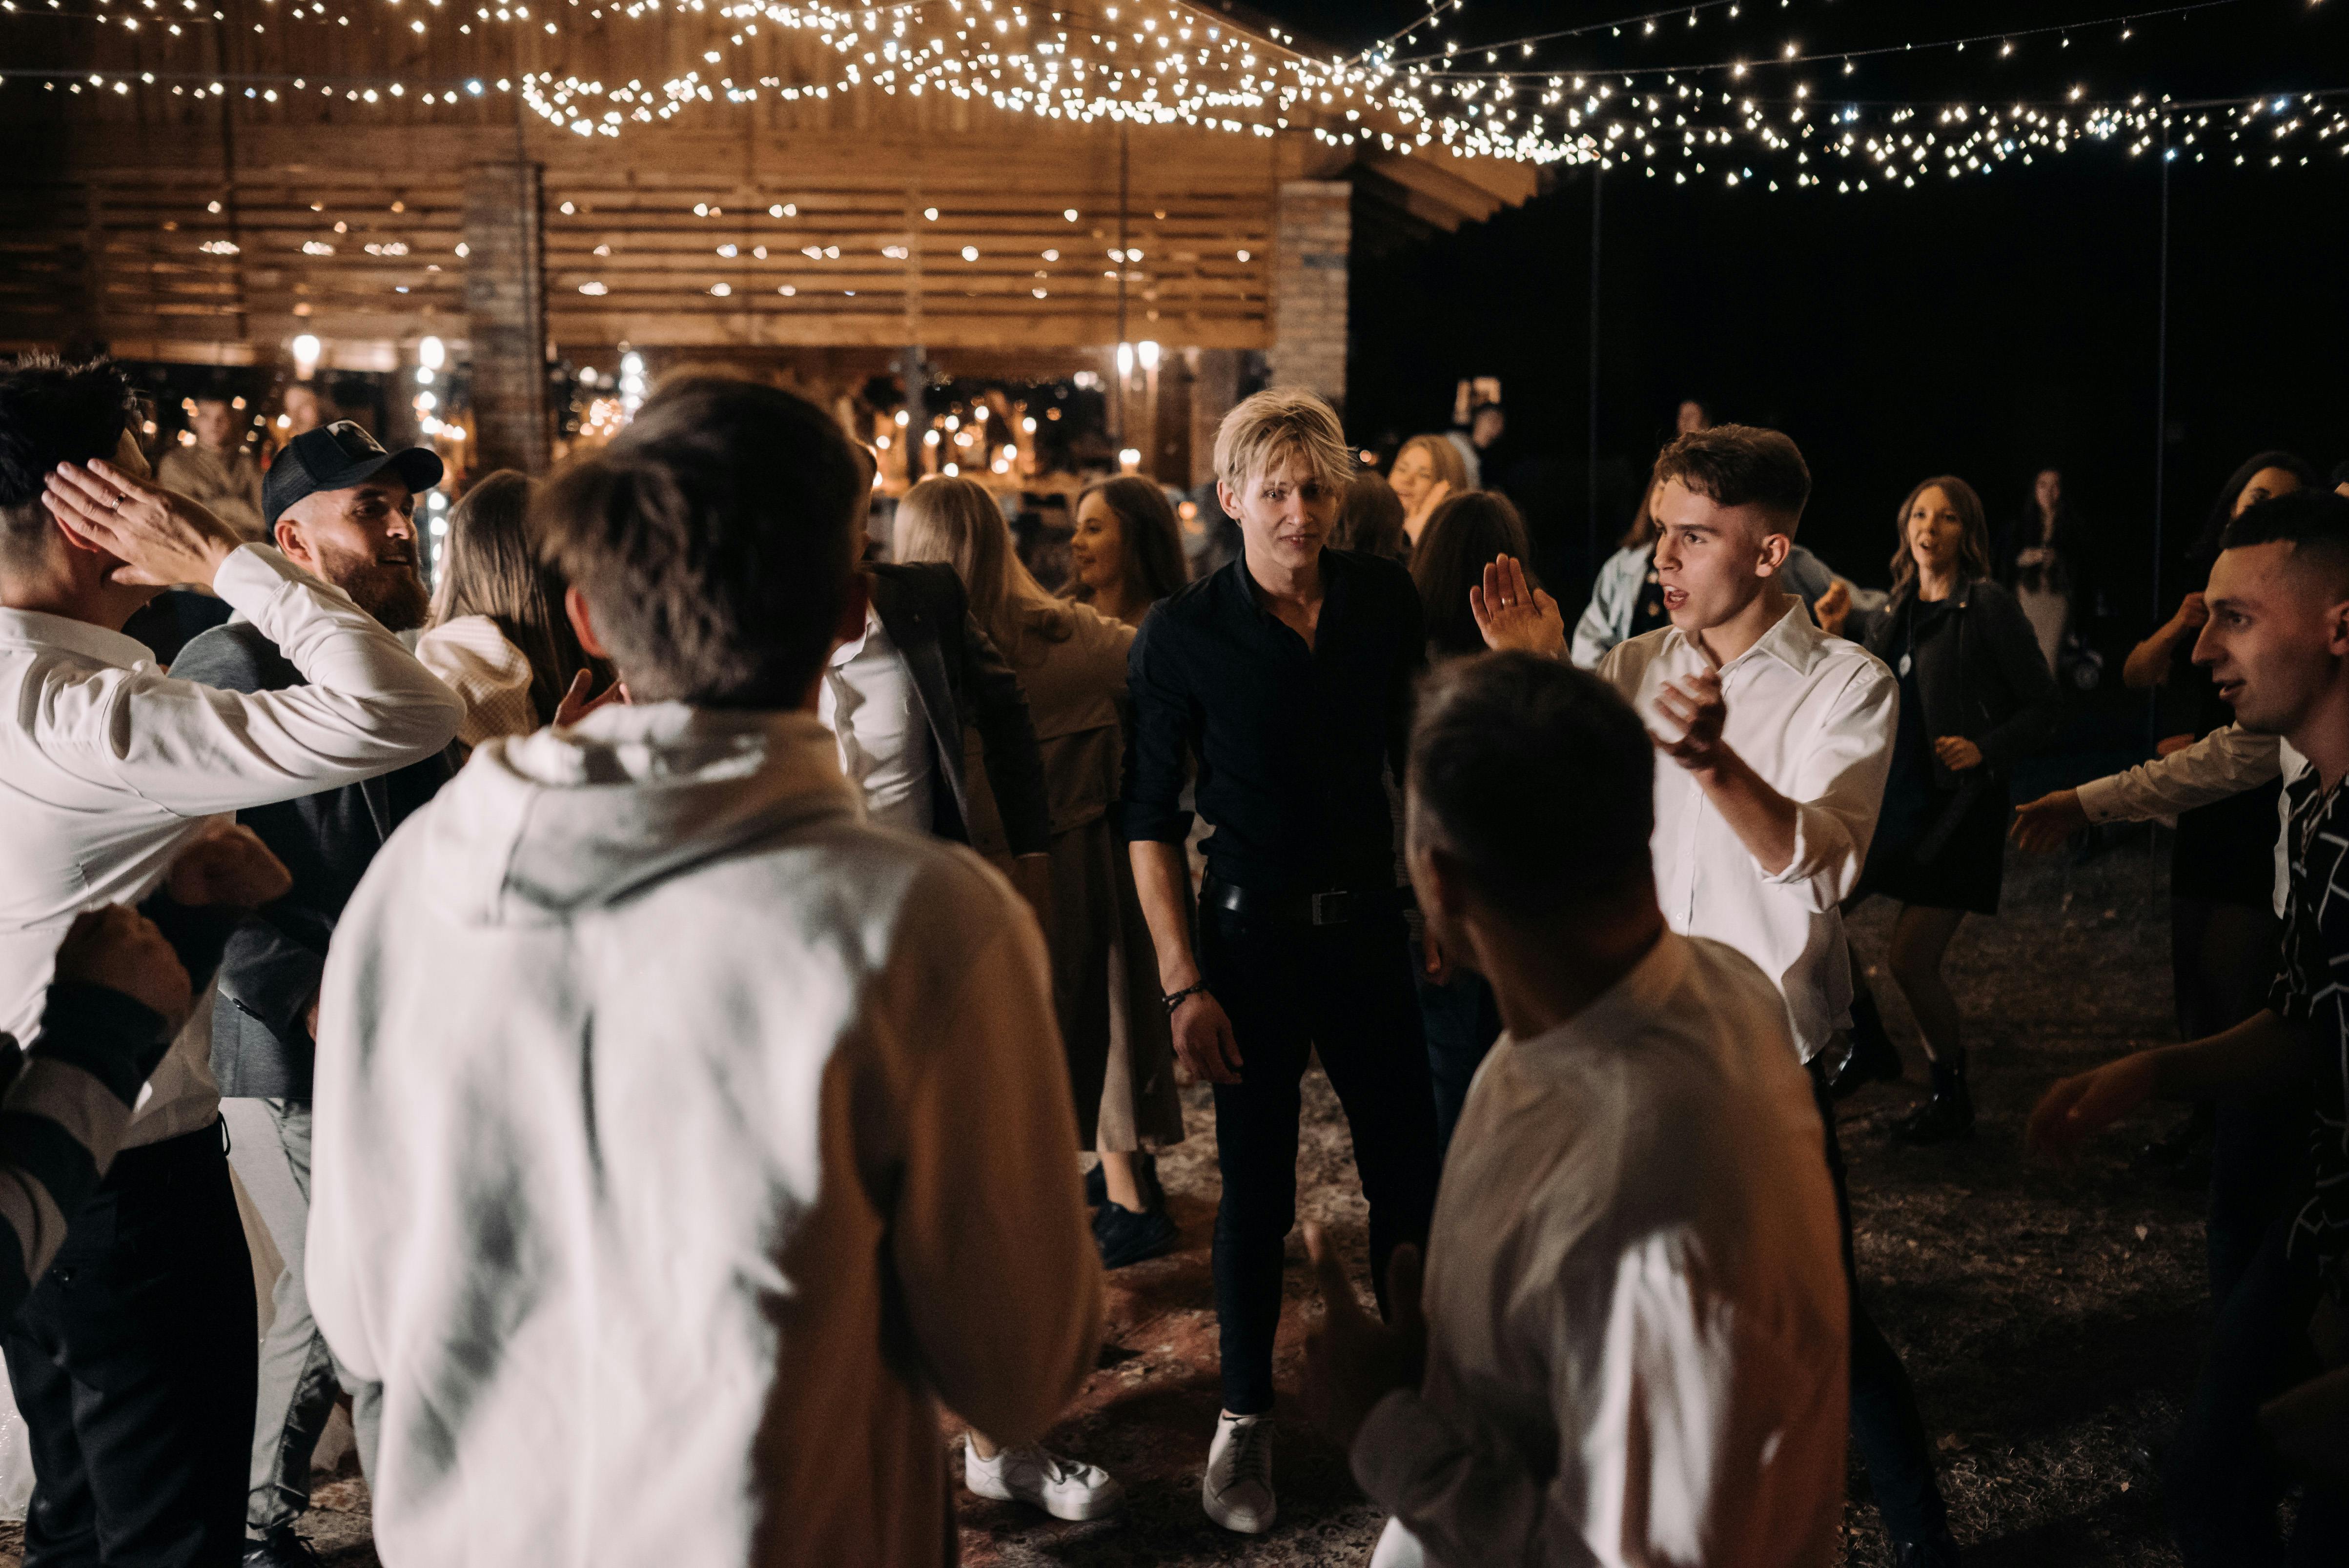 People dancing at a wedding | Source: Pexels